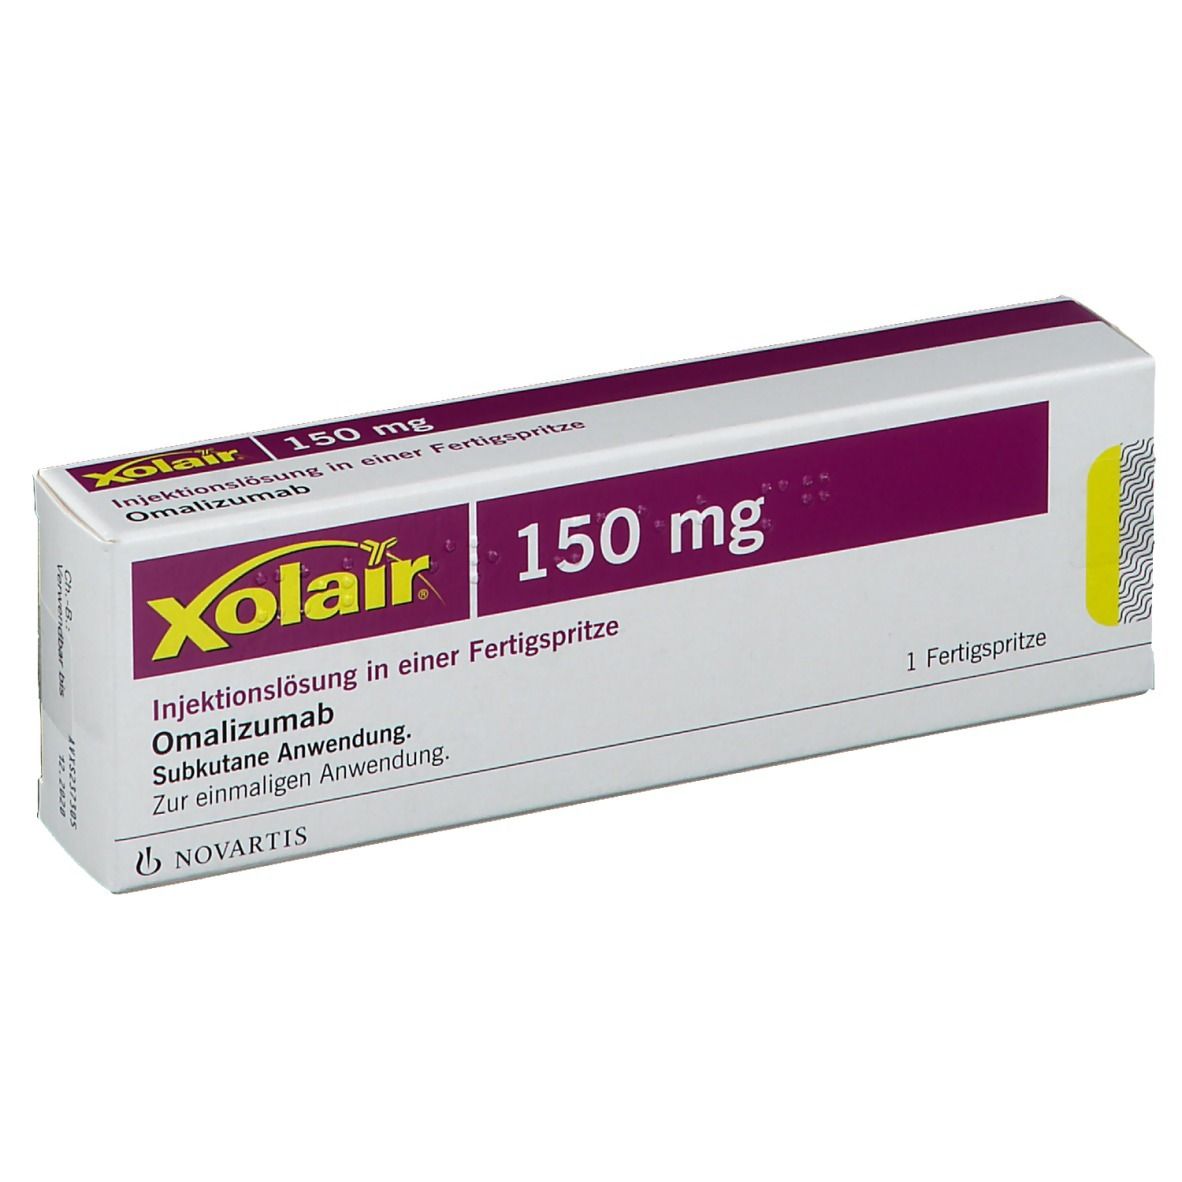 Xolair® 150 mg